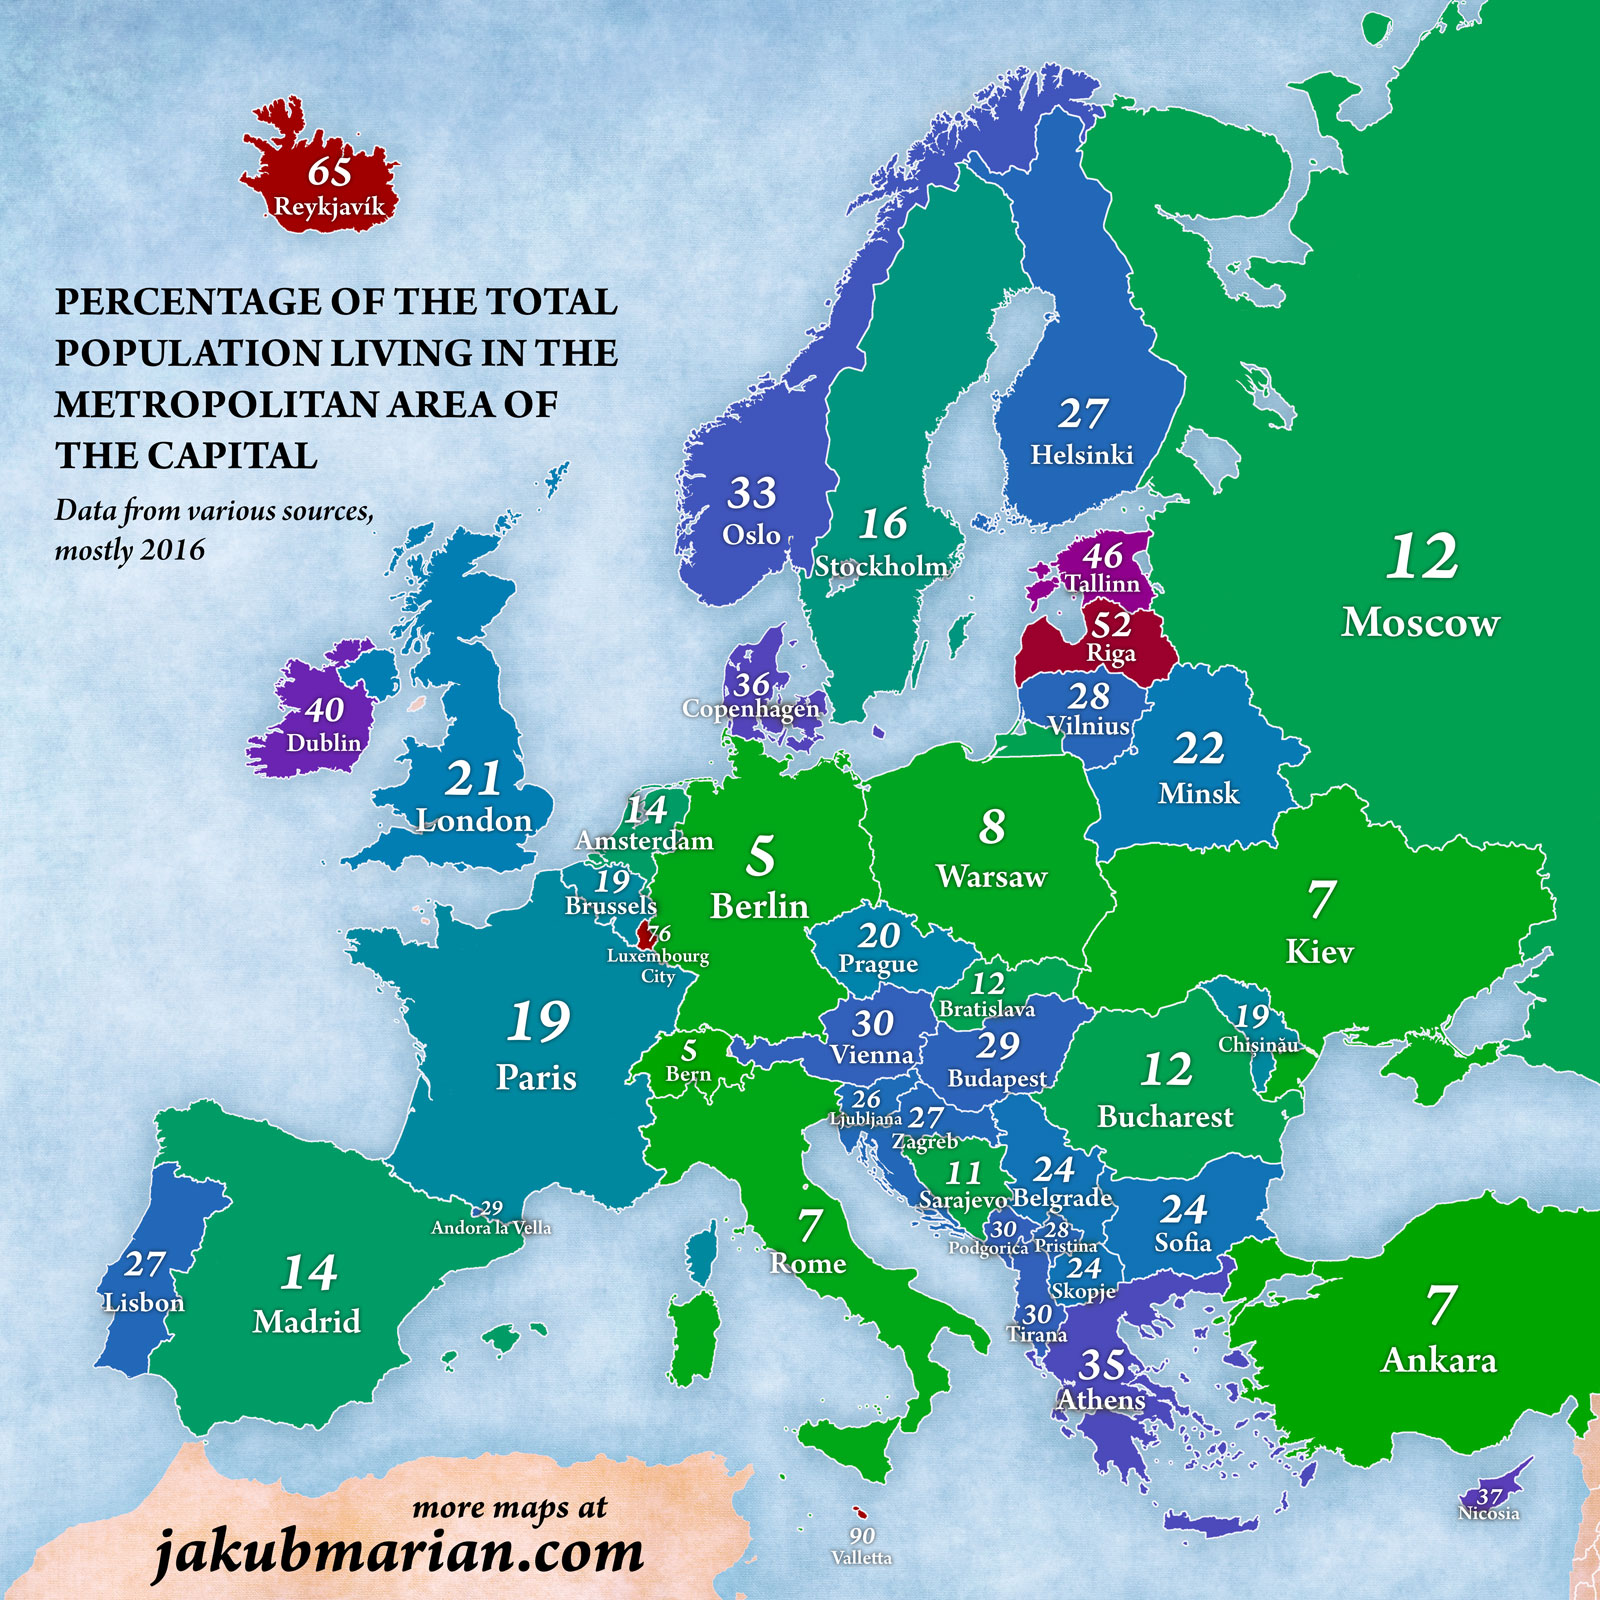 European Demographics Maps And Charts